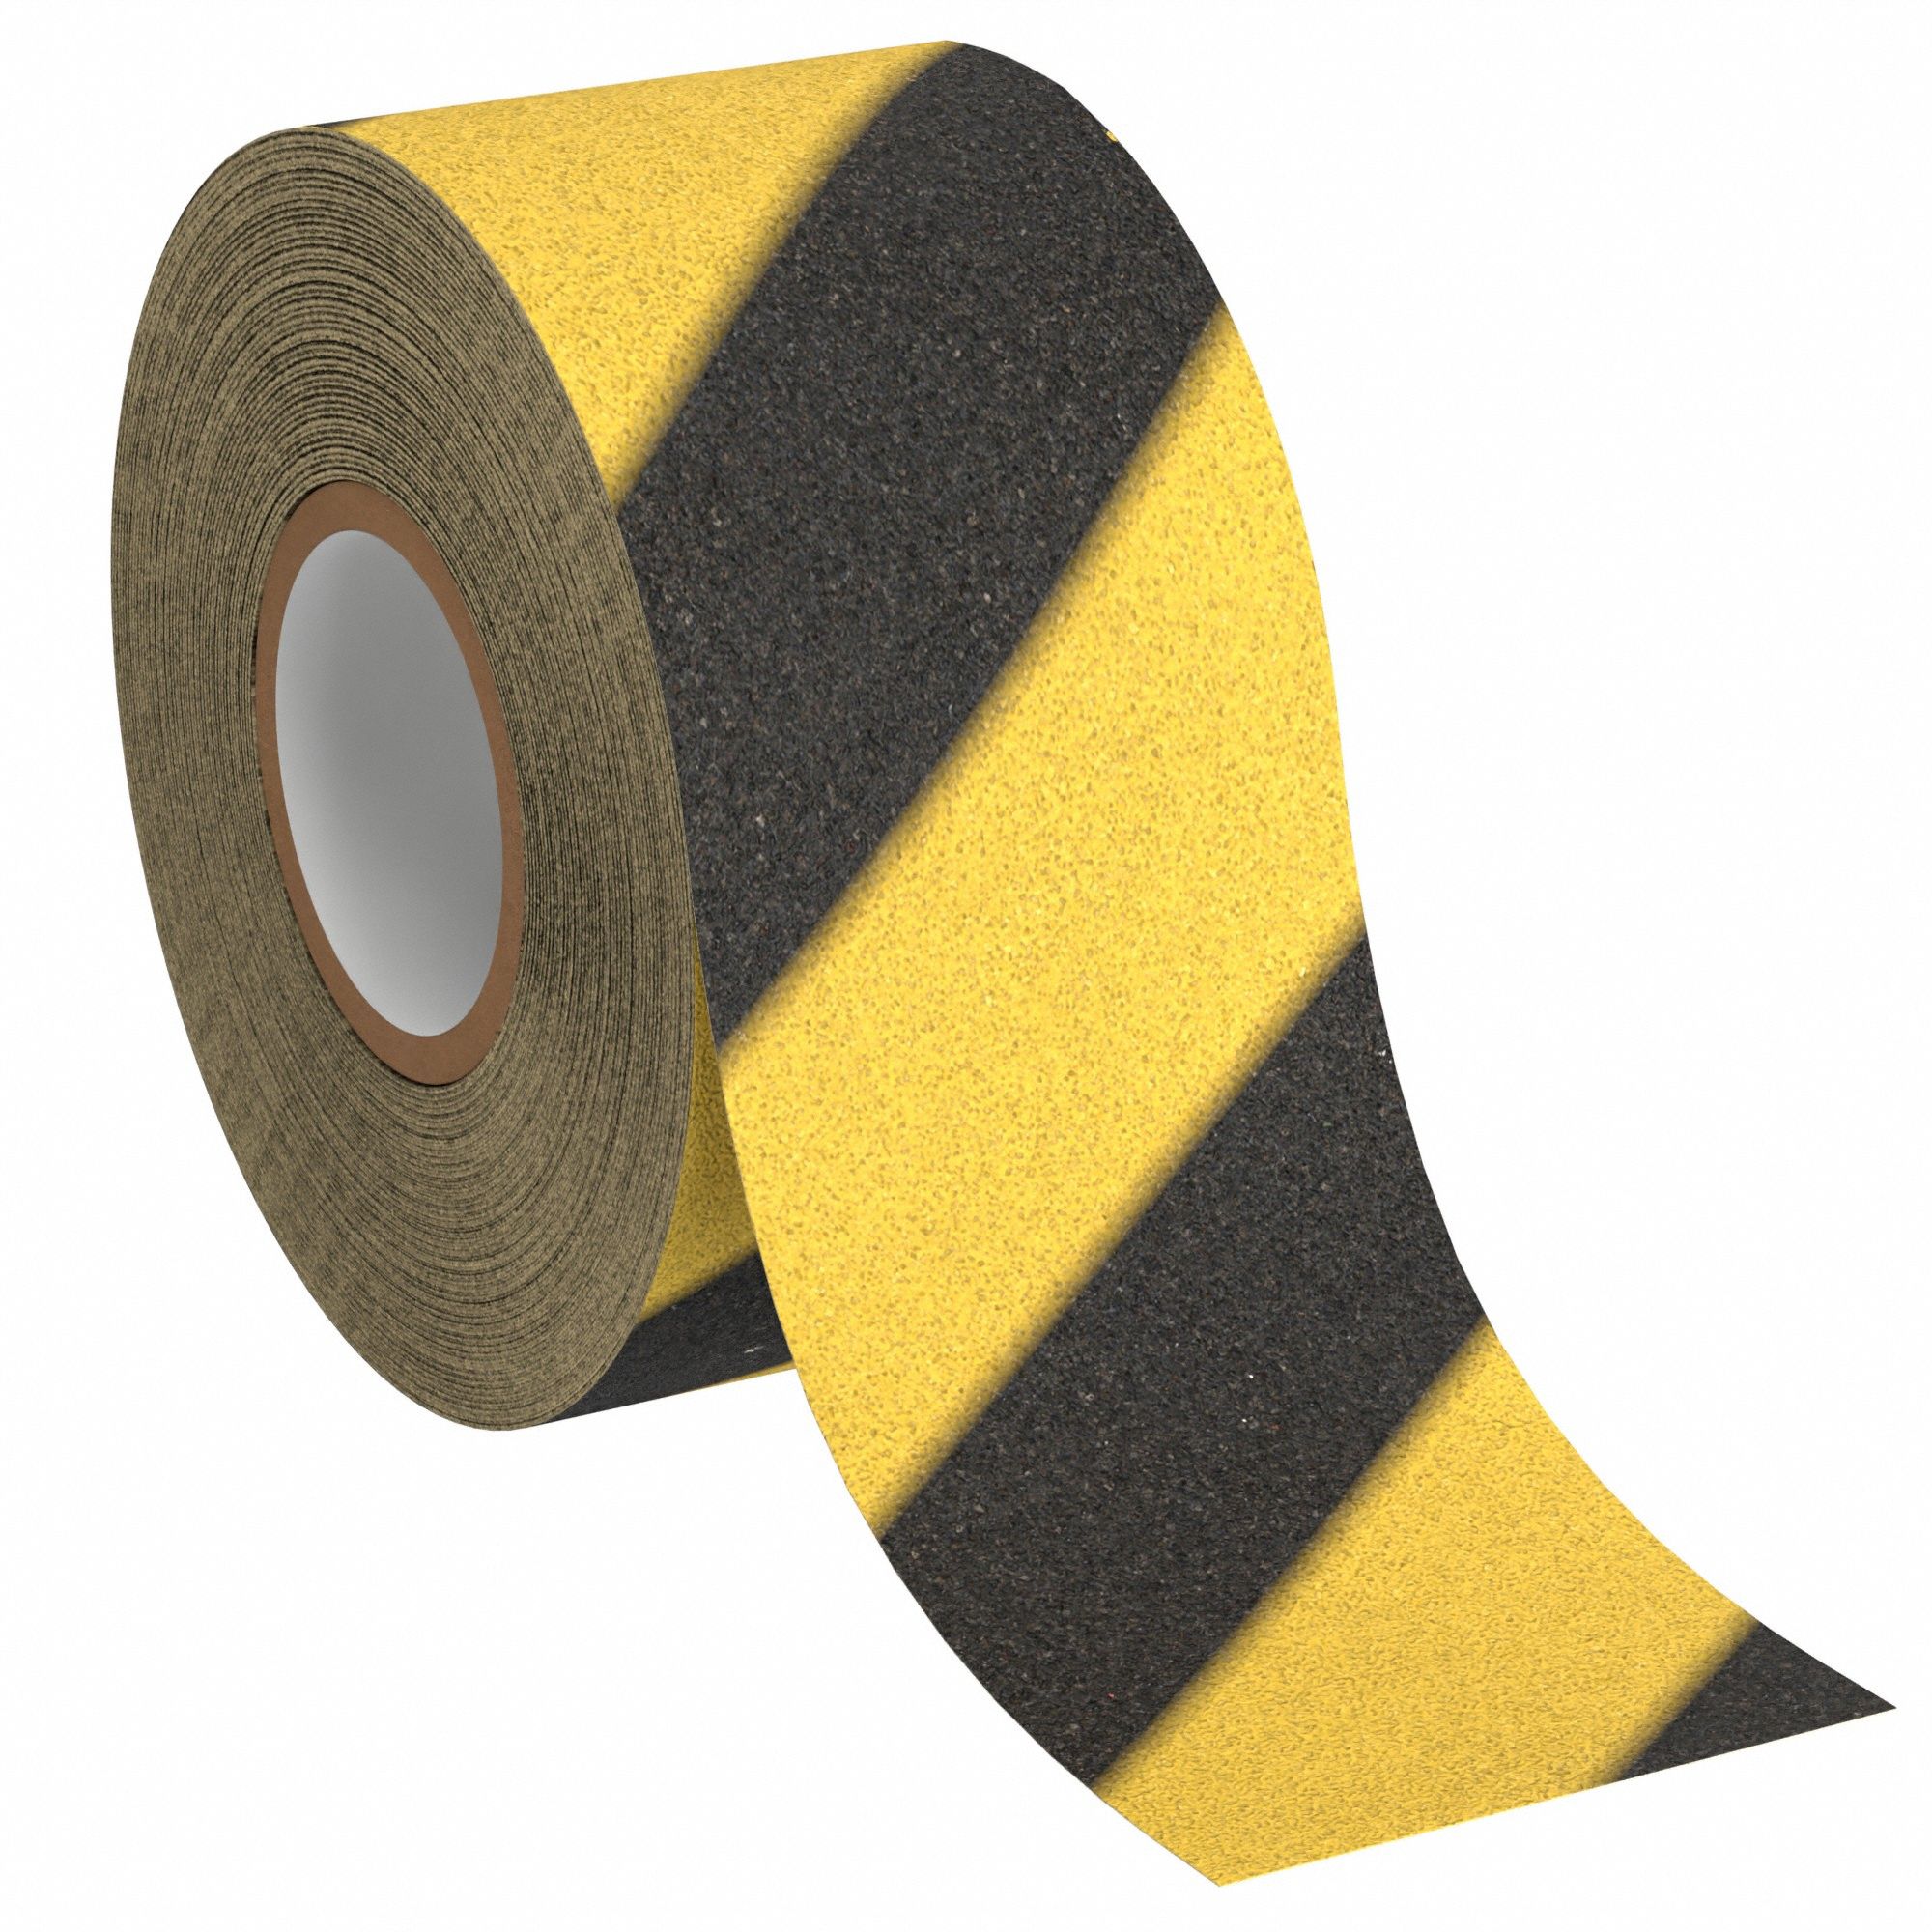 3M 630-B Yellow Anti-Slip Tape - 1 Width x 60 ft Length 7000052247